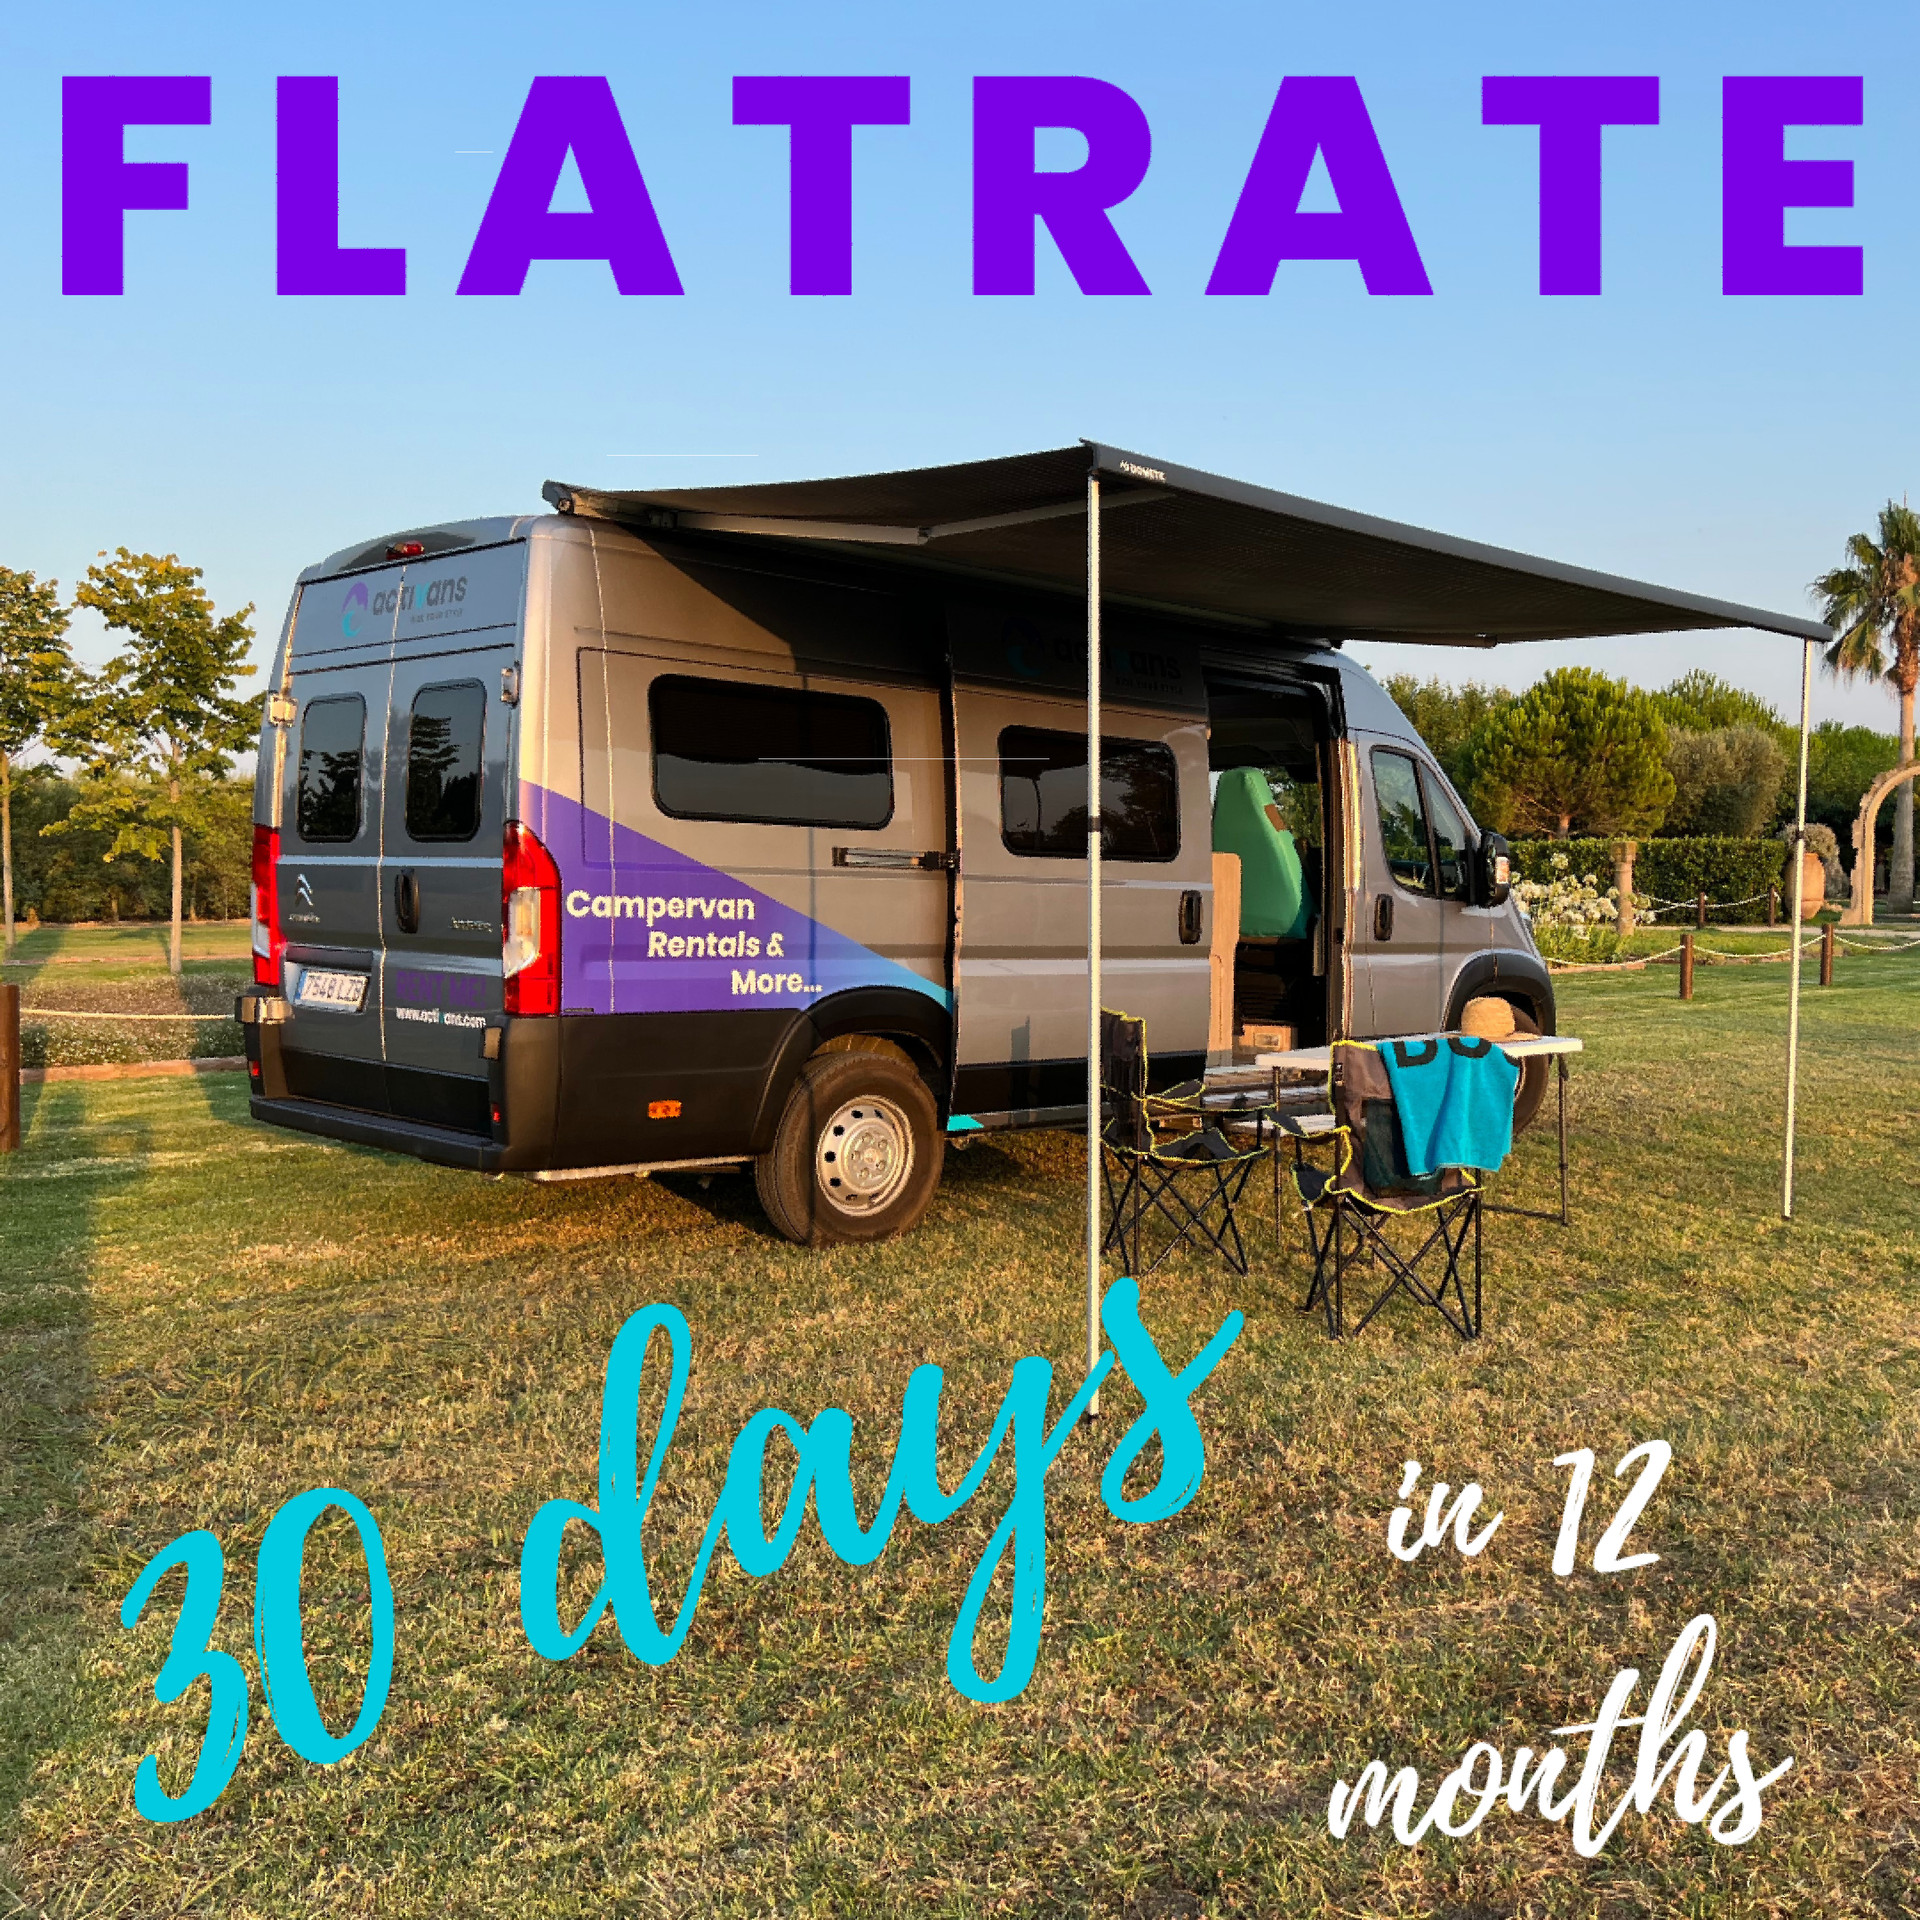 Best price Activans campervan rental Flatrate 30 days 